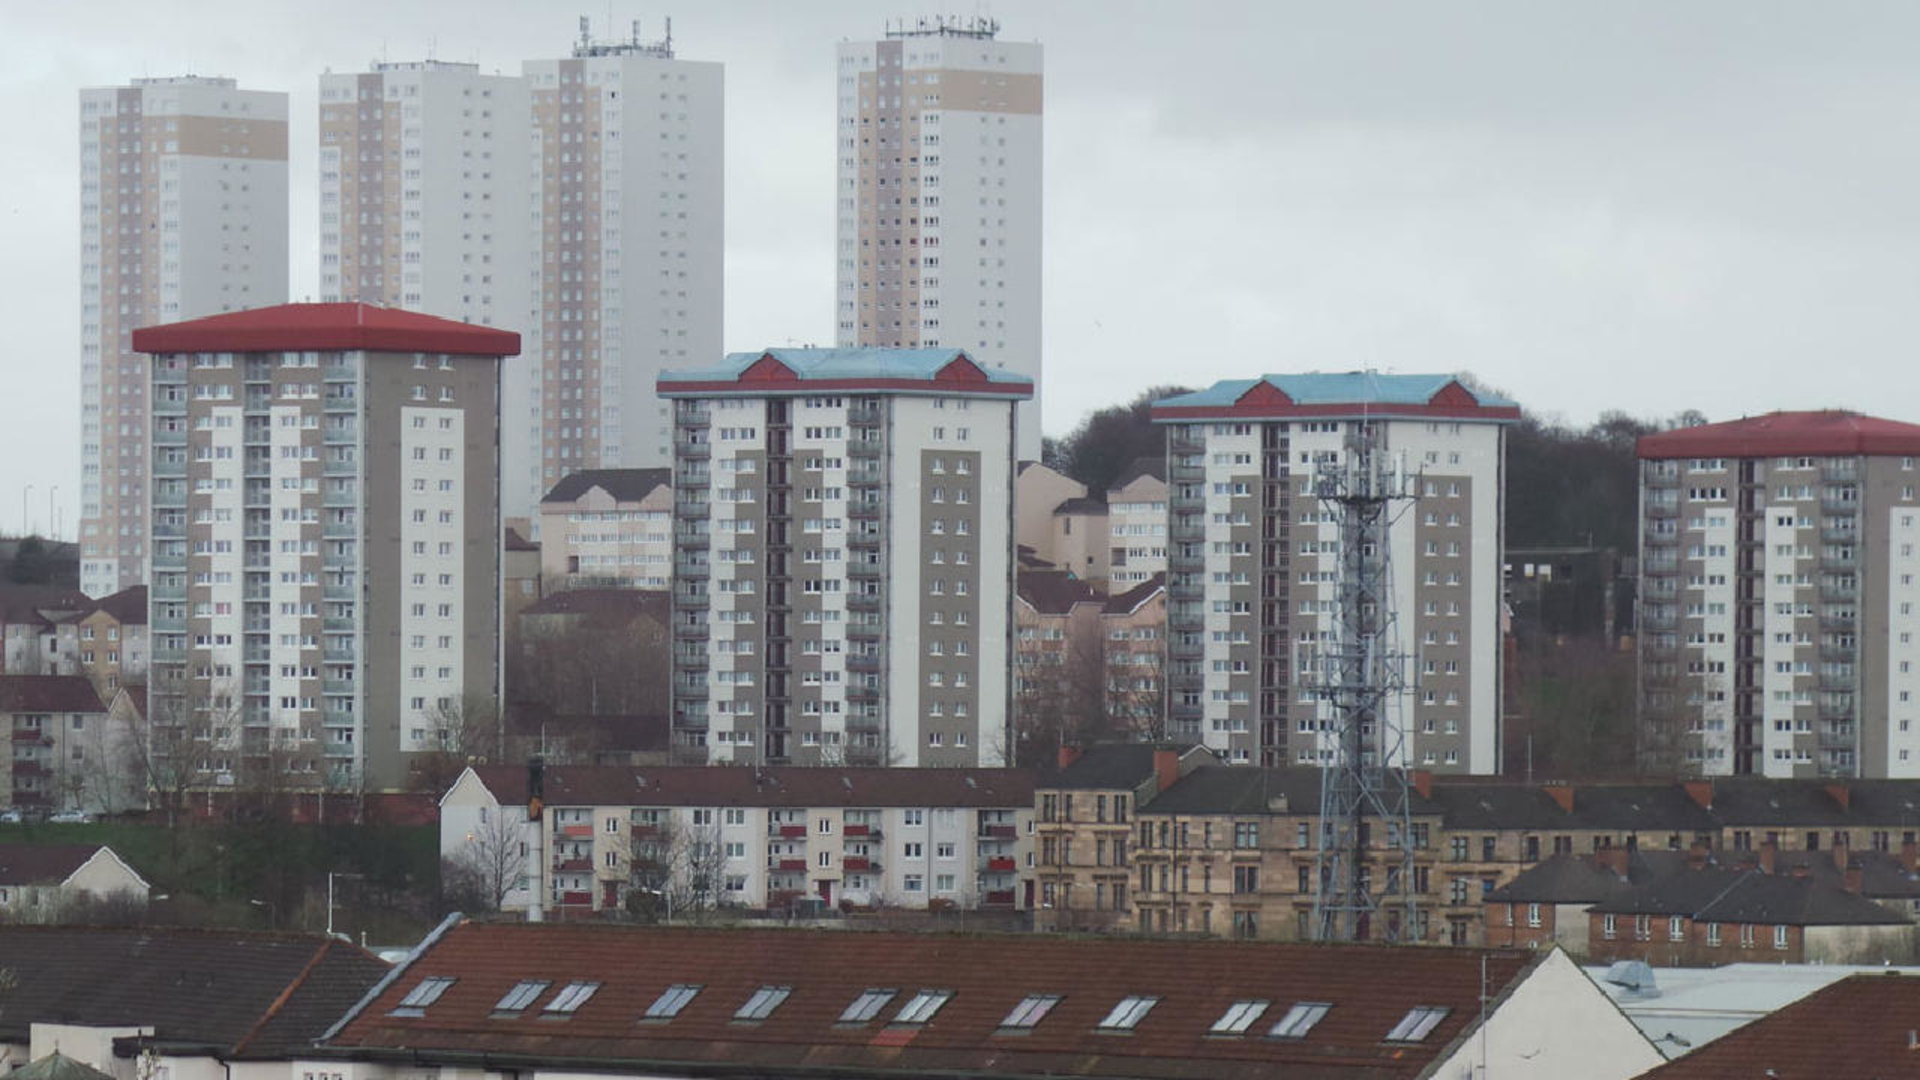 Glasgow housing